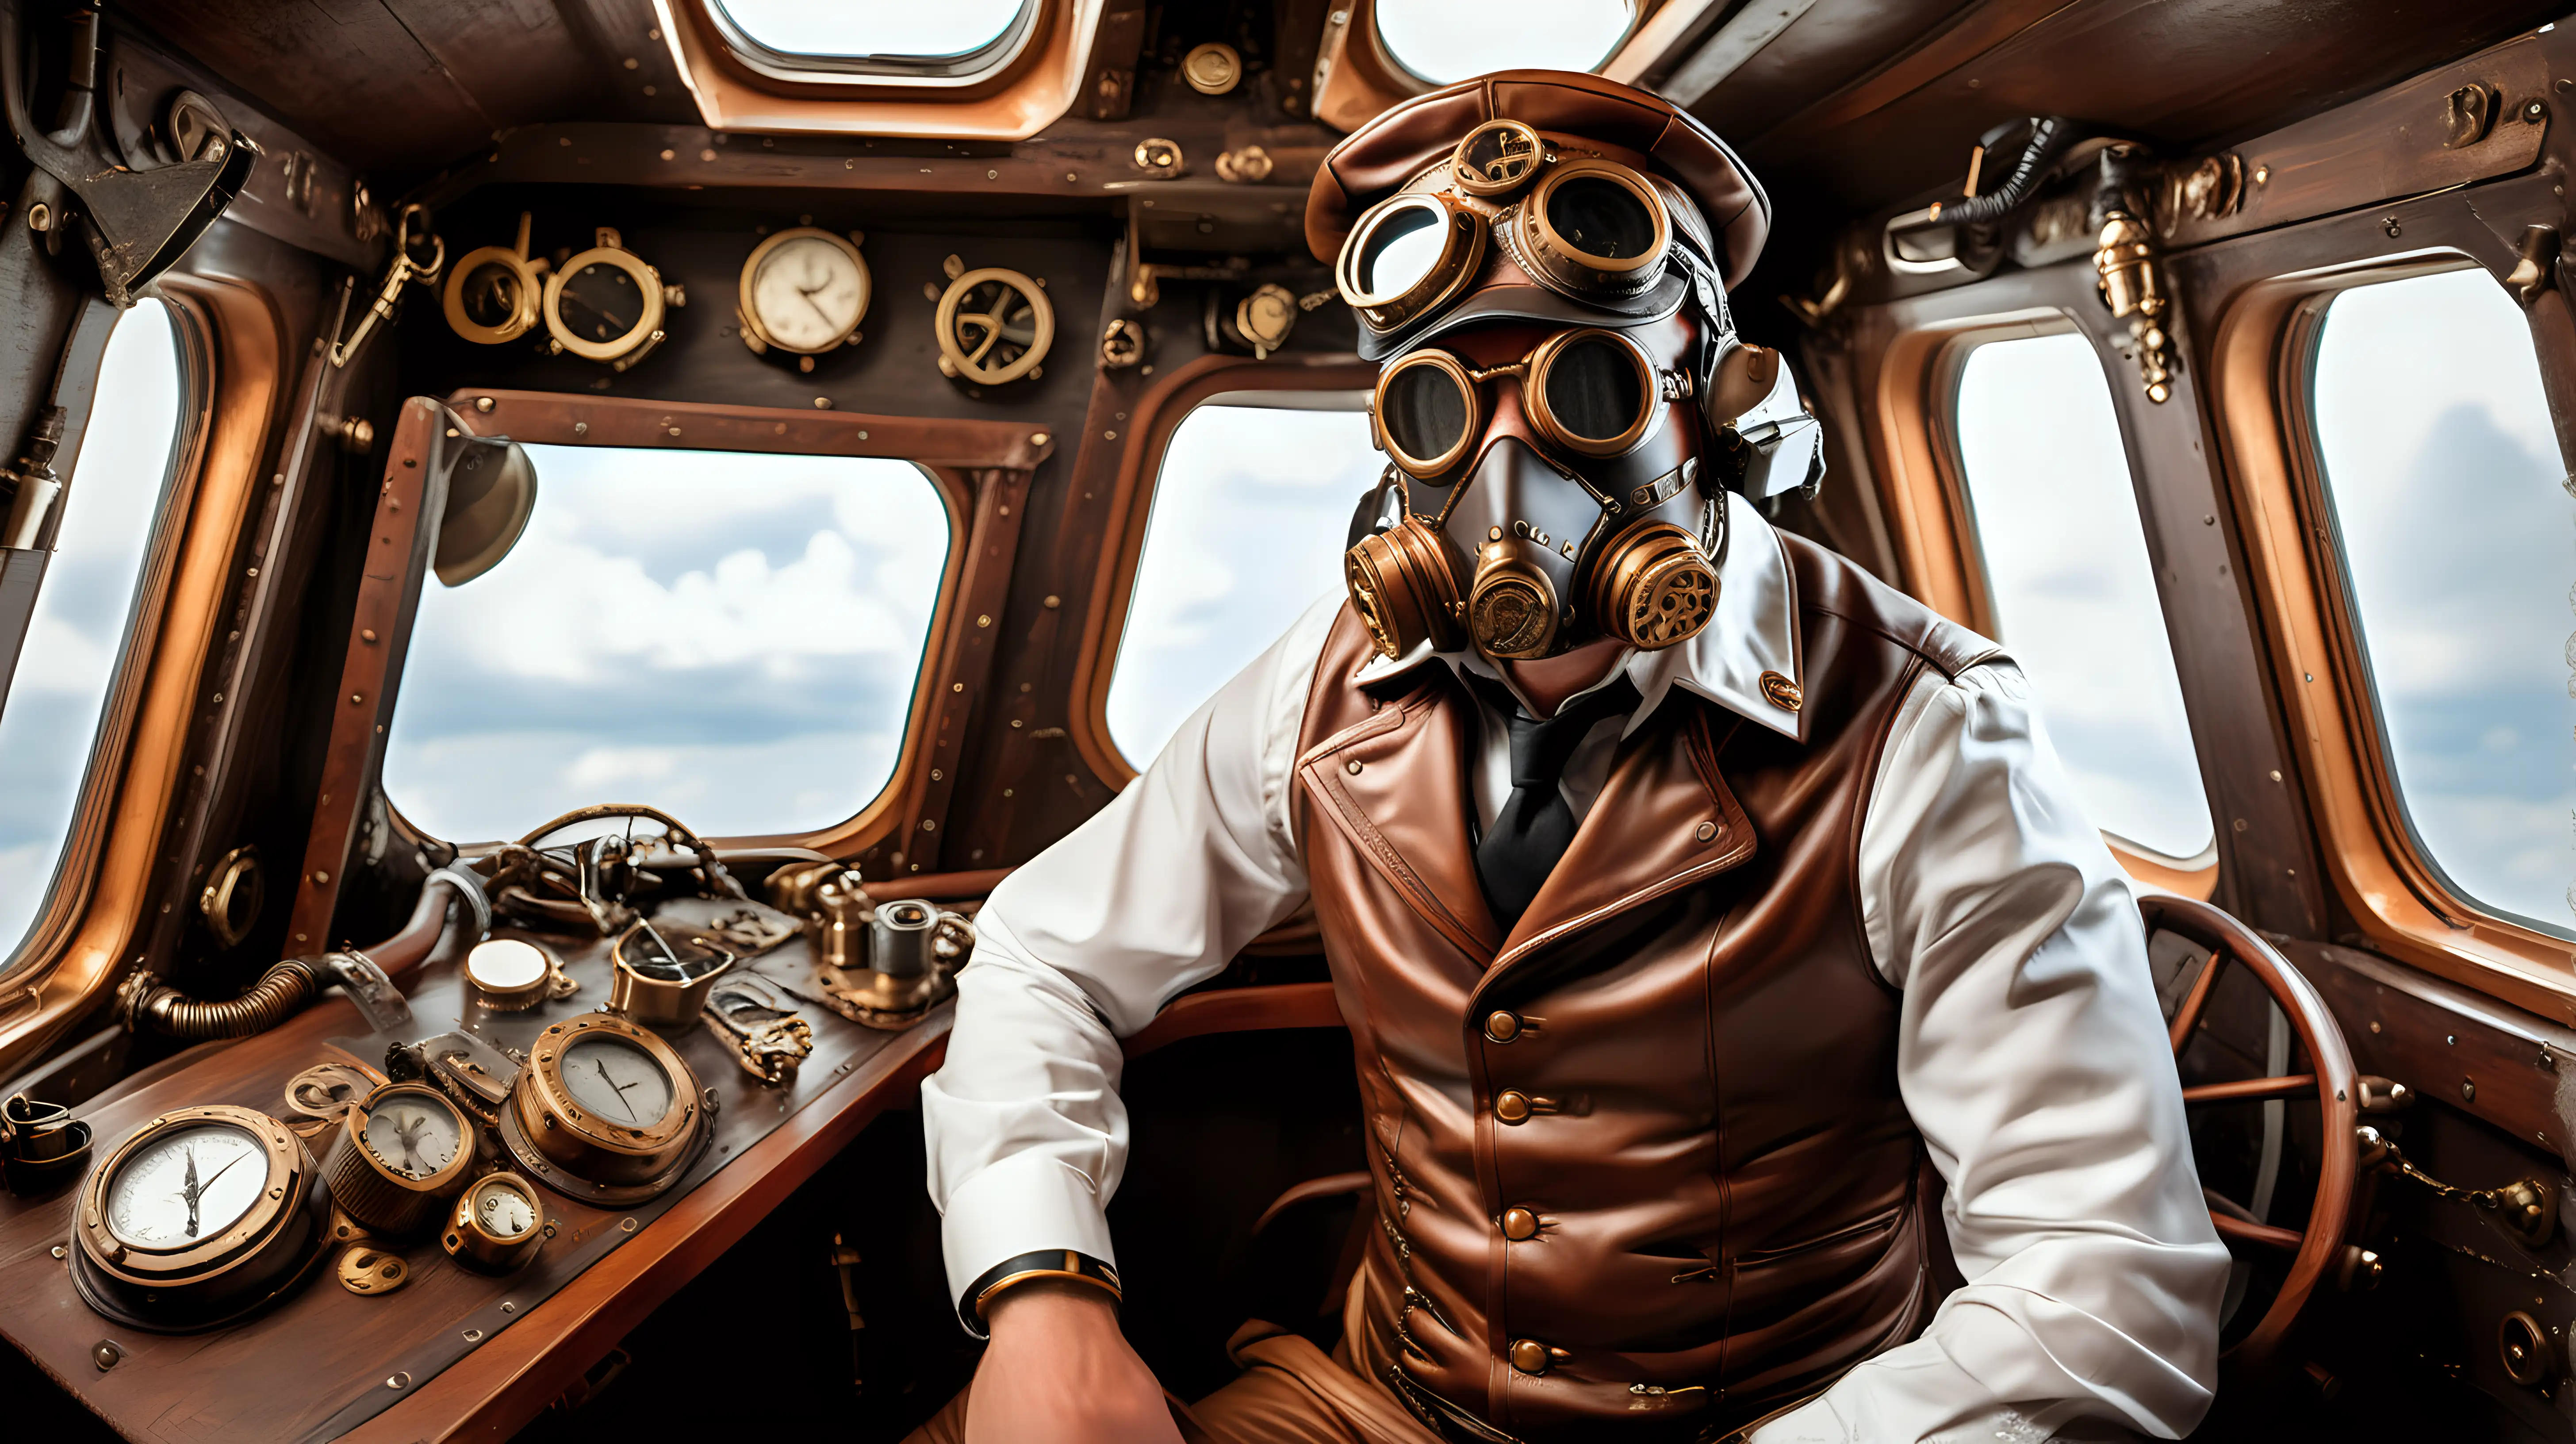 Steampunk pilot wit mask in cabin